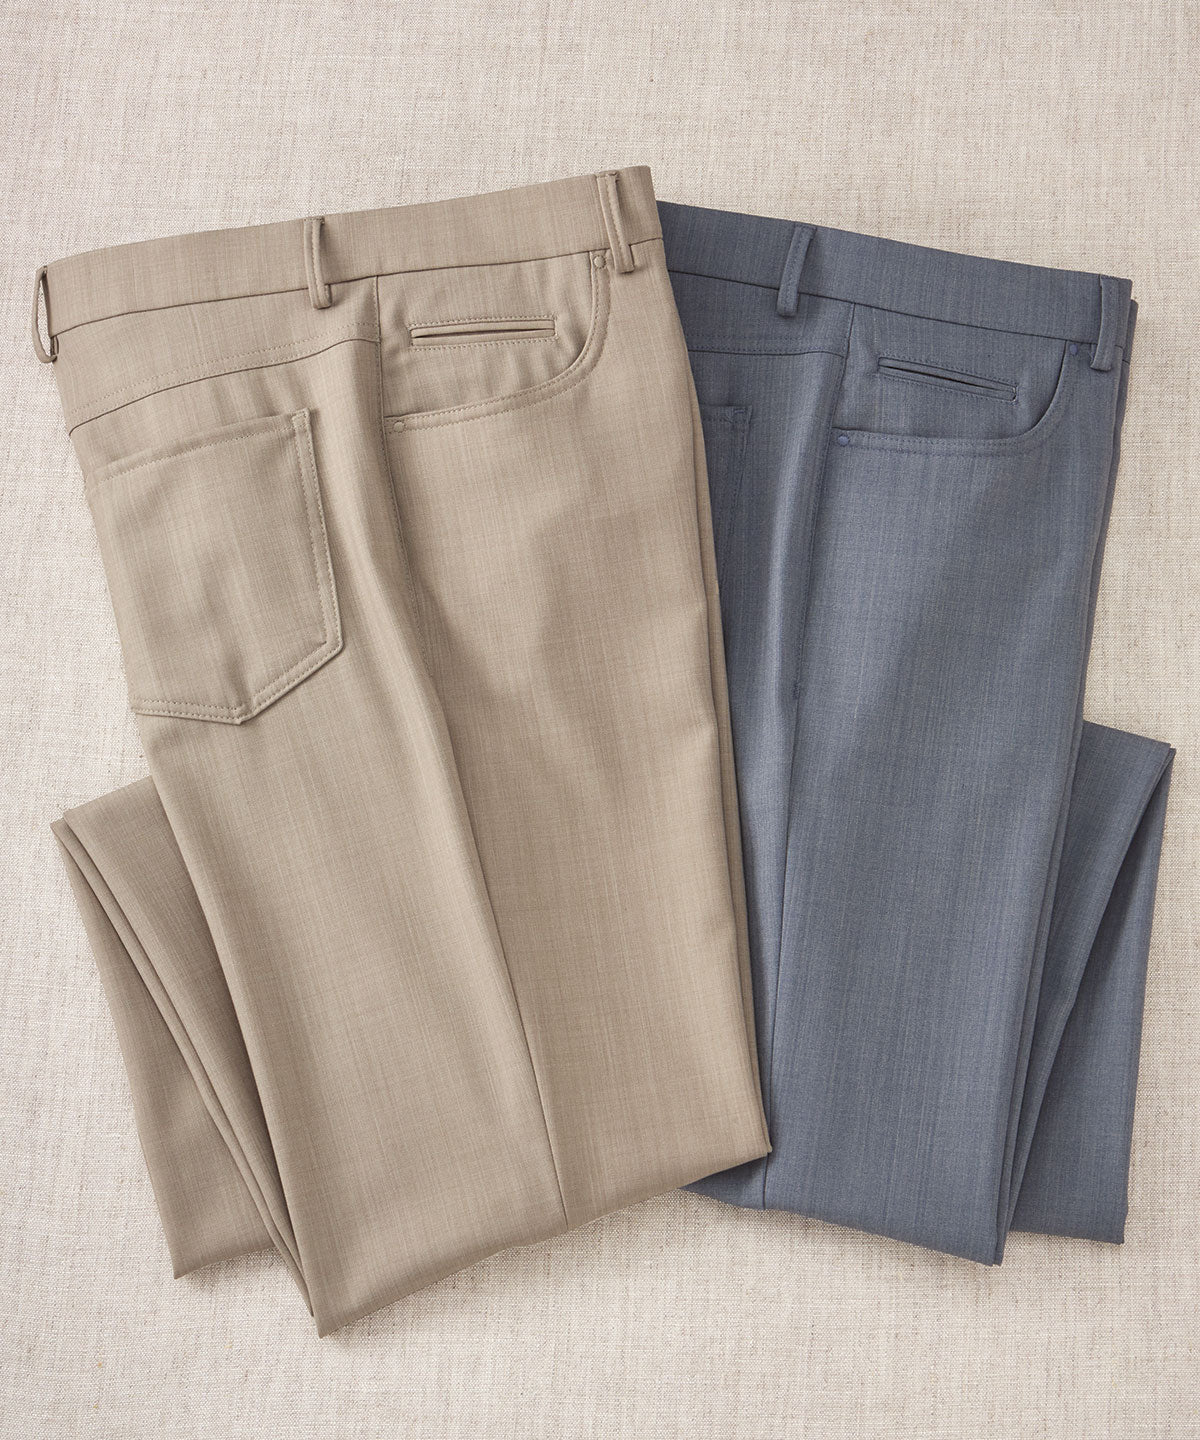 Wool Pants And Trousers | Erkek giysileri, Pantolon, Denim ceketler